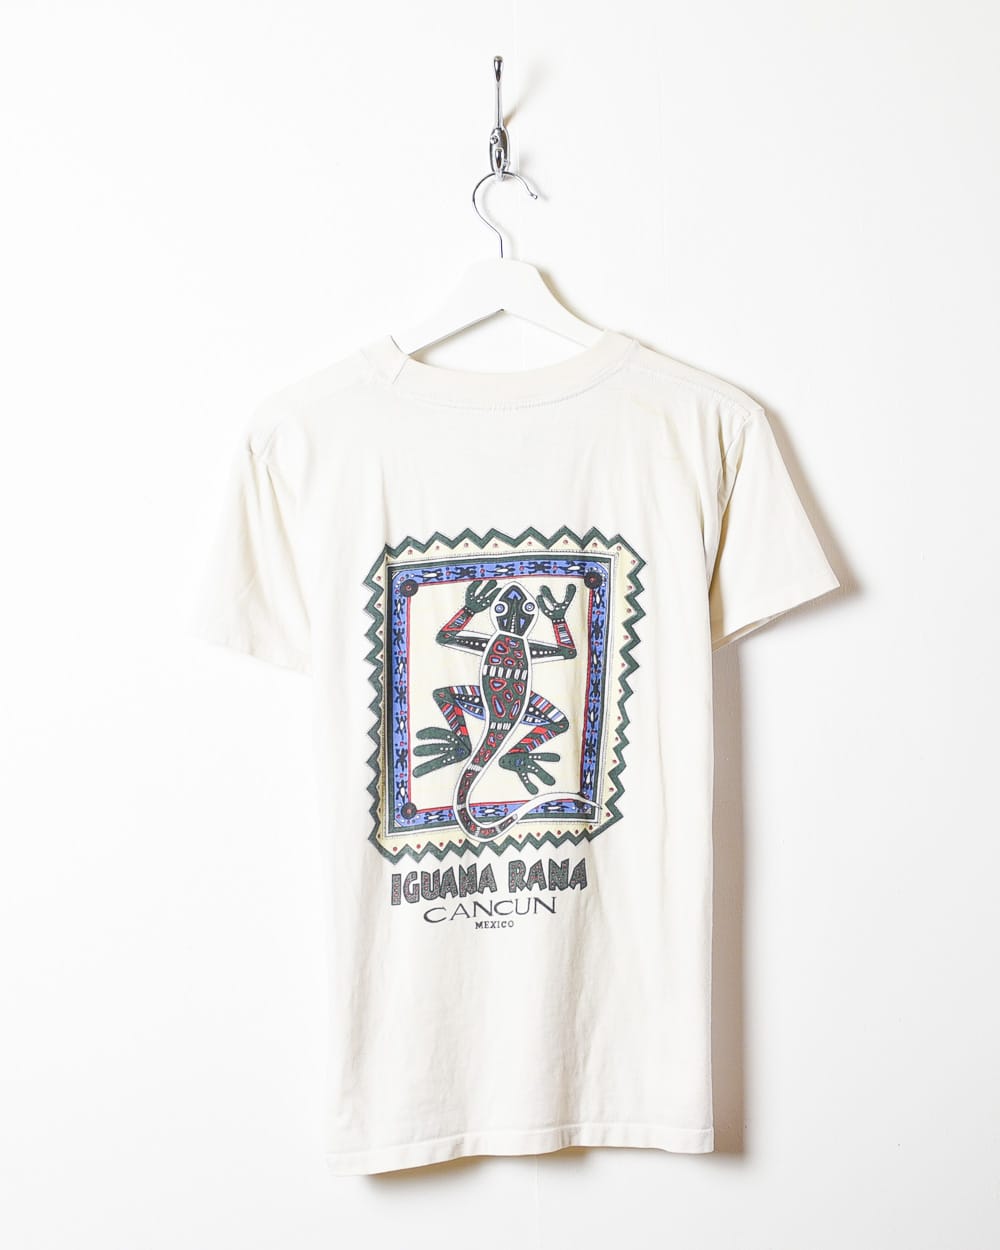 White Iguana Rana T-Shirt - Small